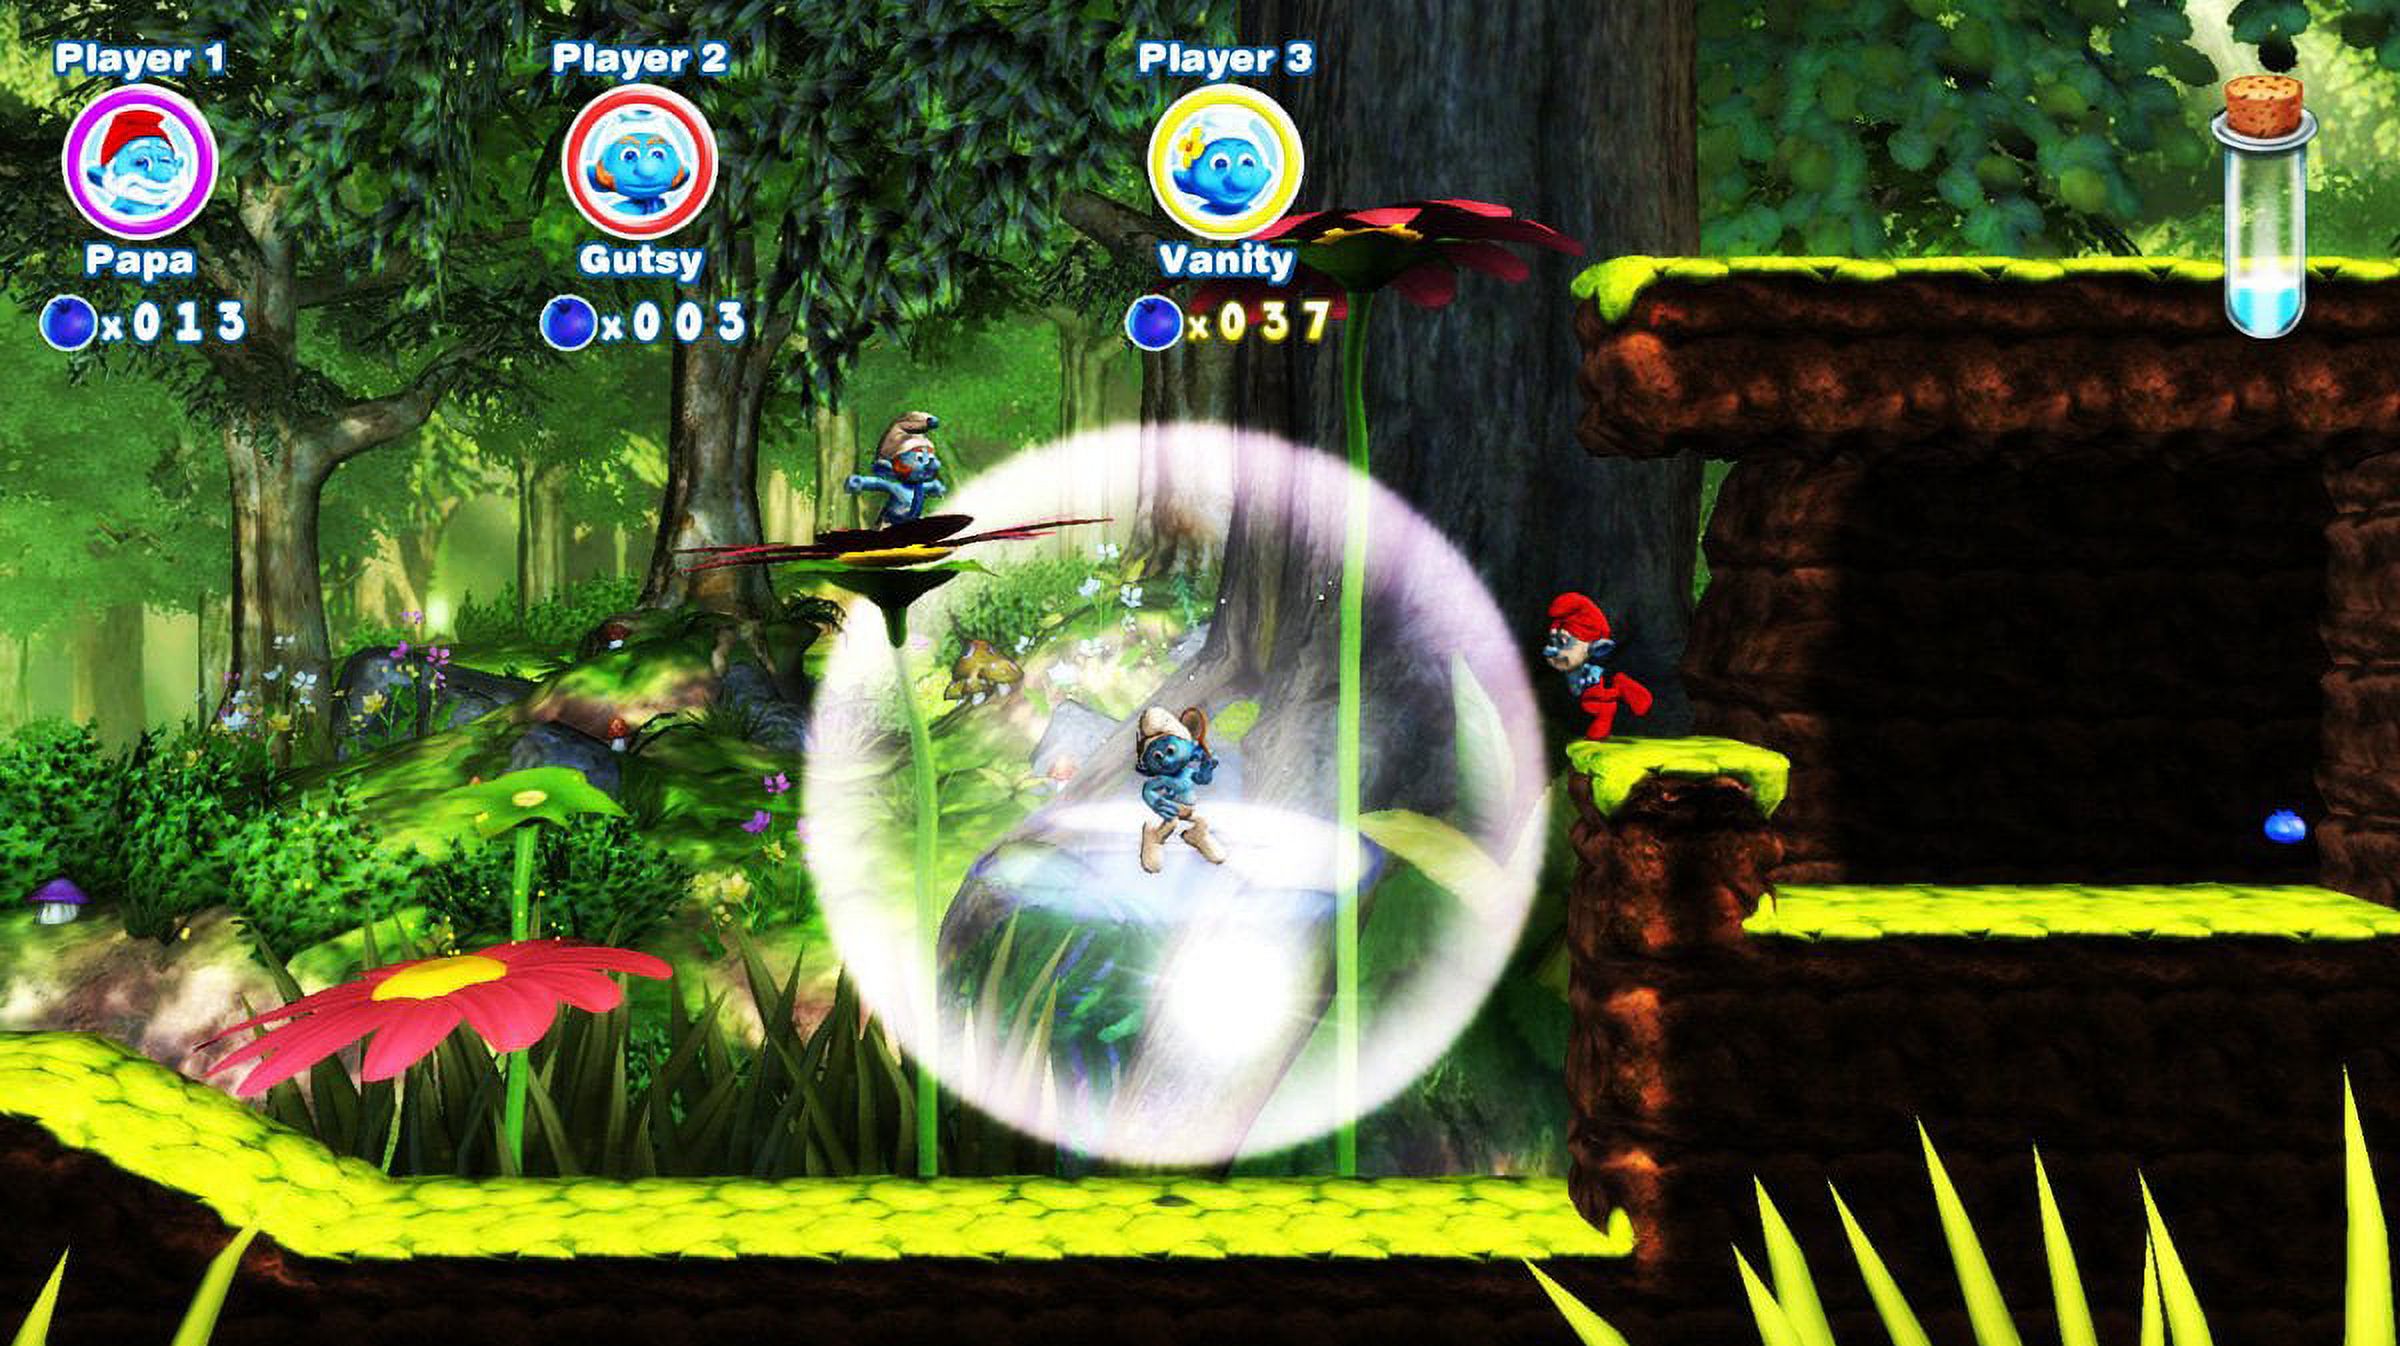 The Smurfs 2 - Nintendo Wii-U - image 2 of 9